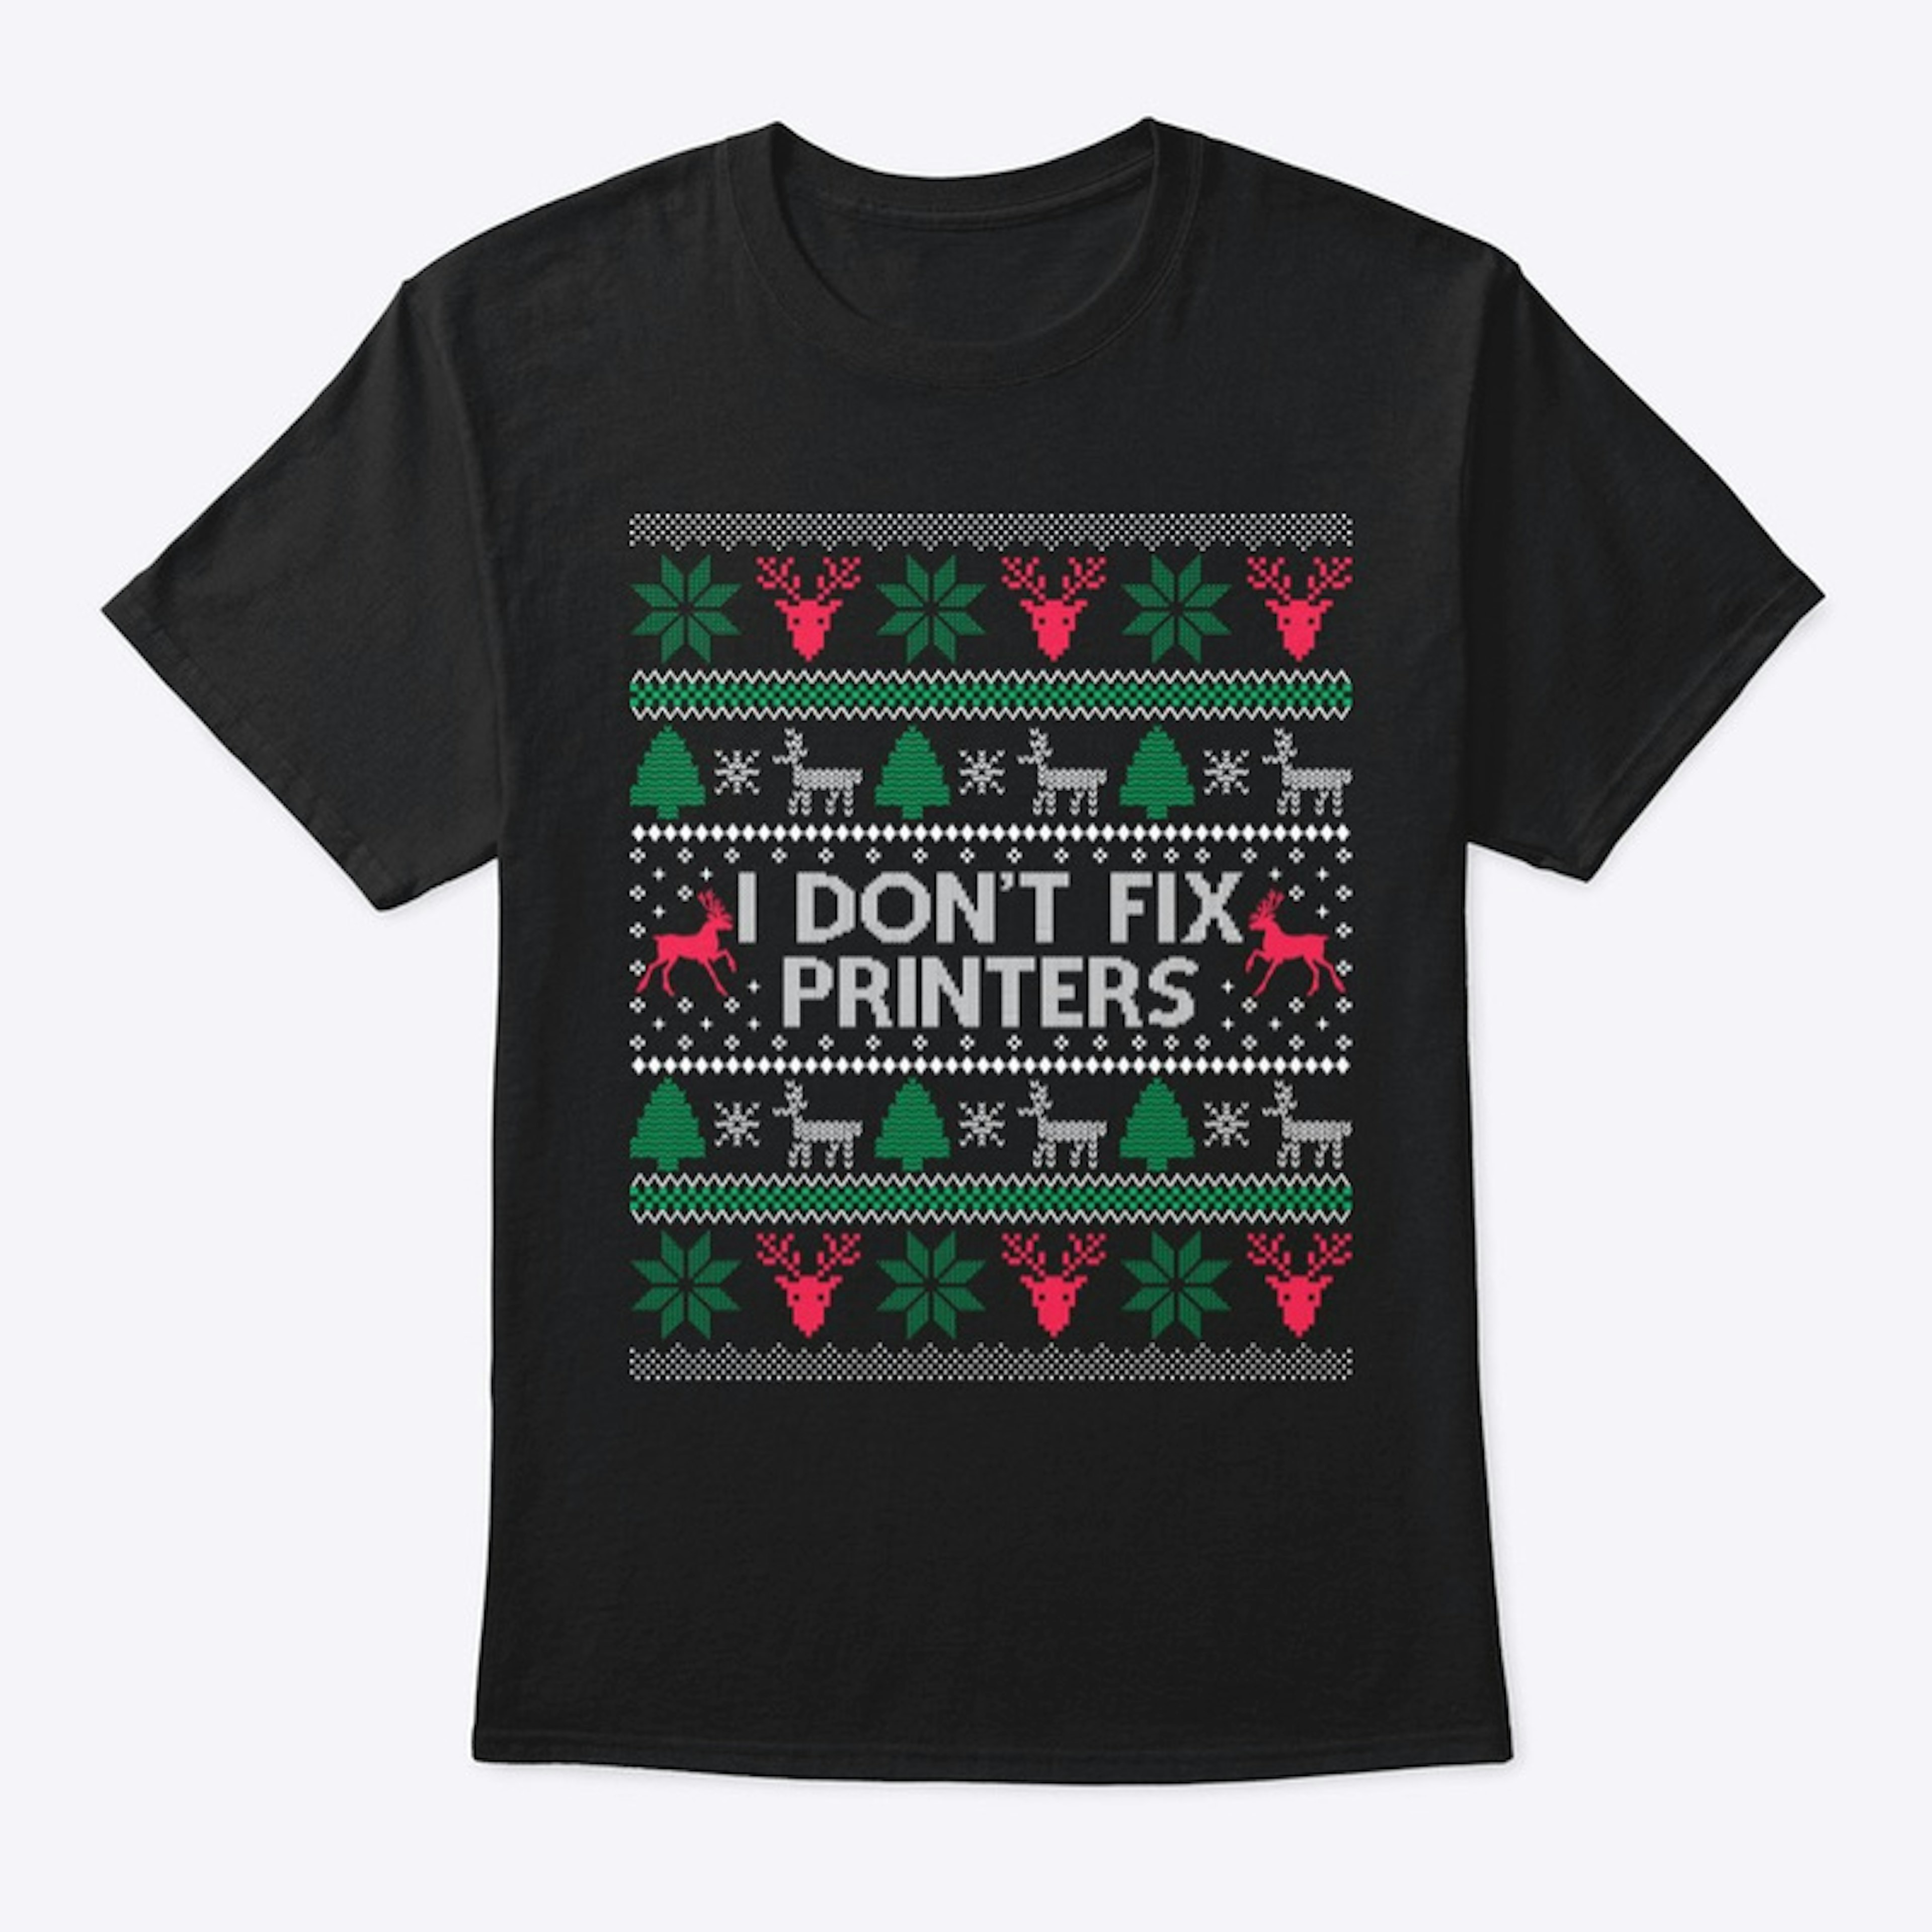 I don't fix printers at christmas